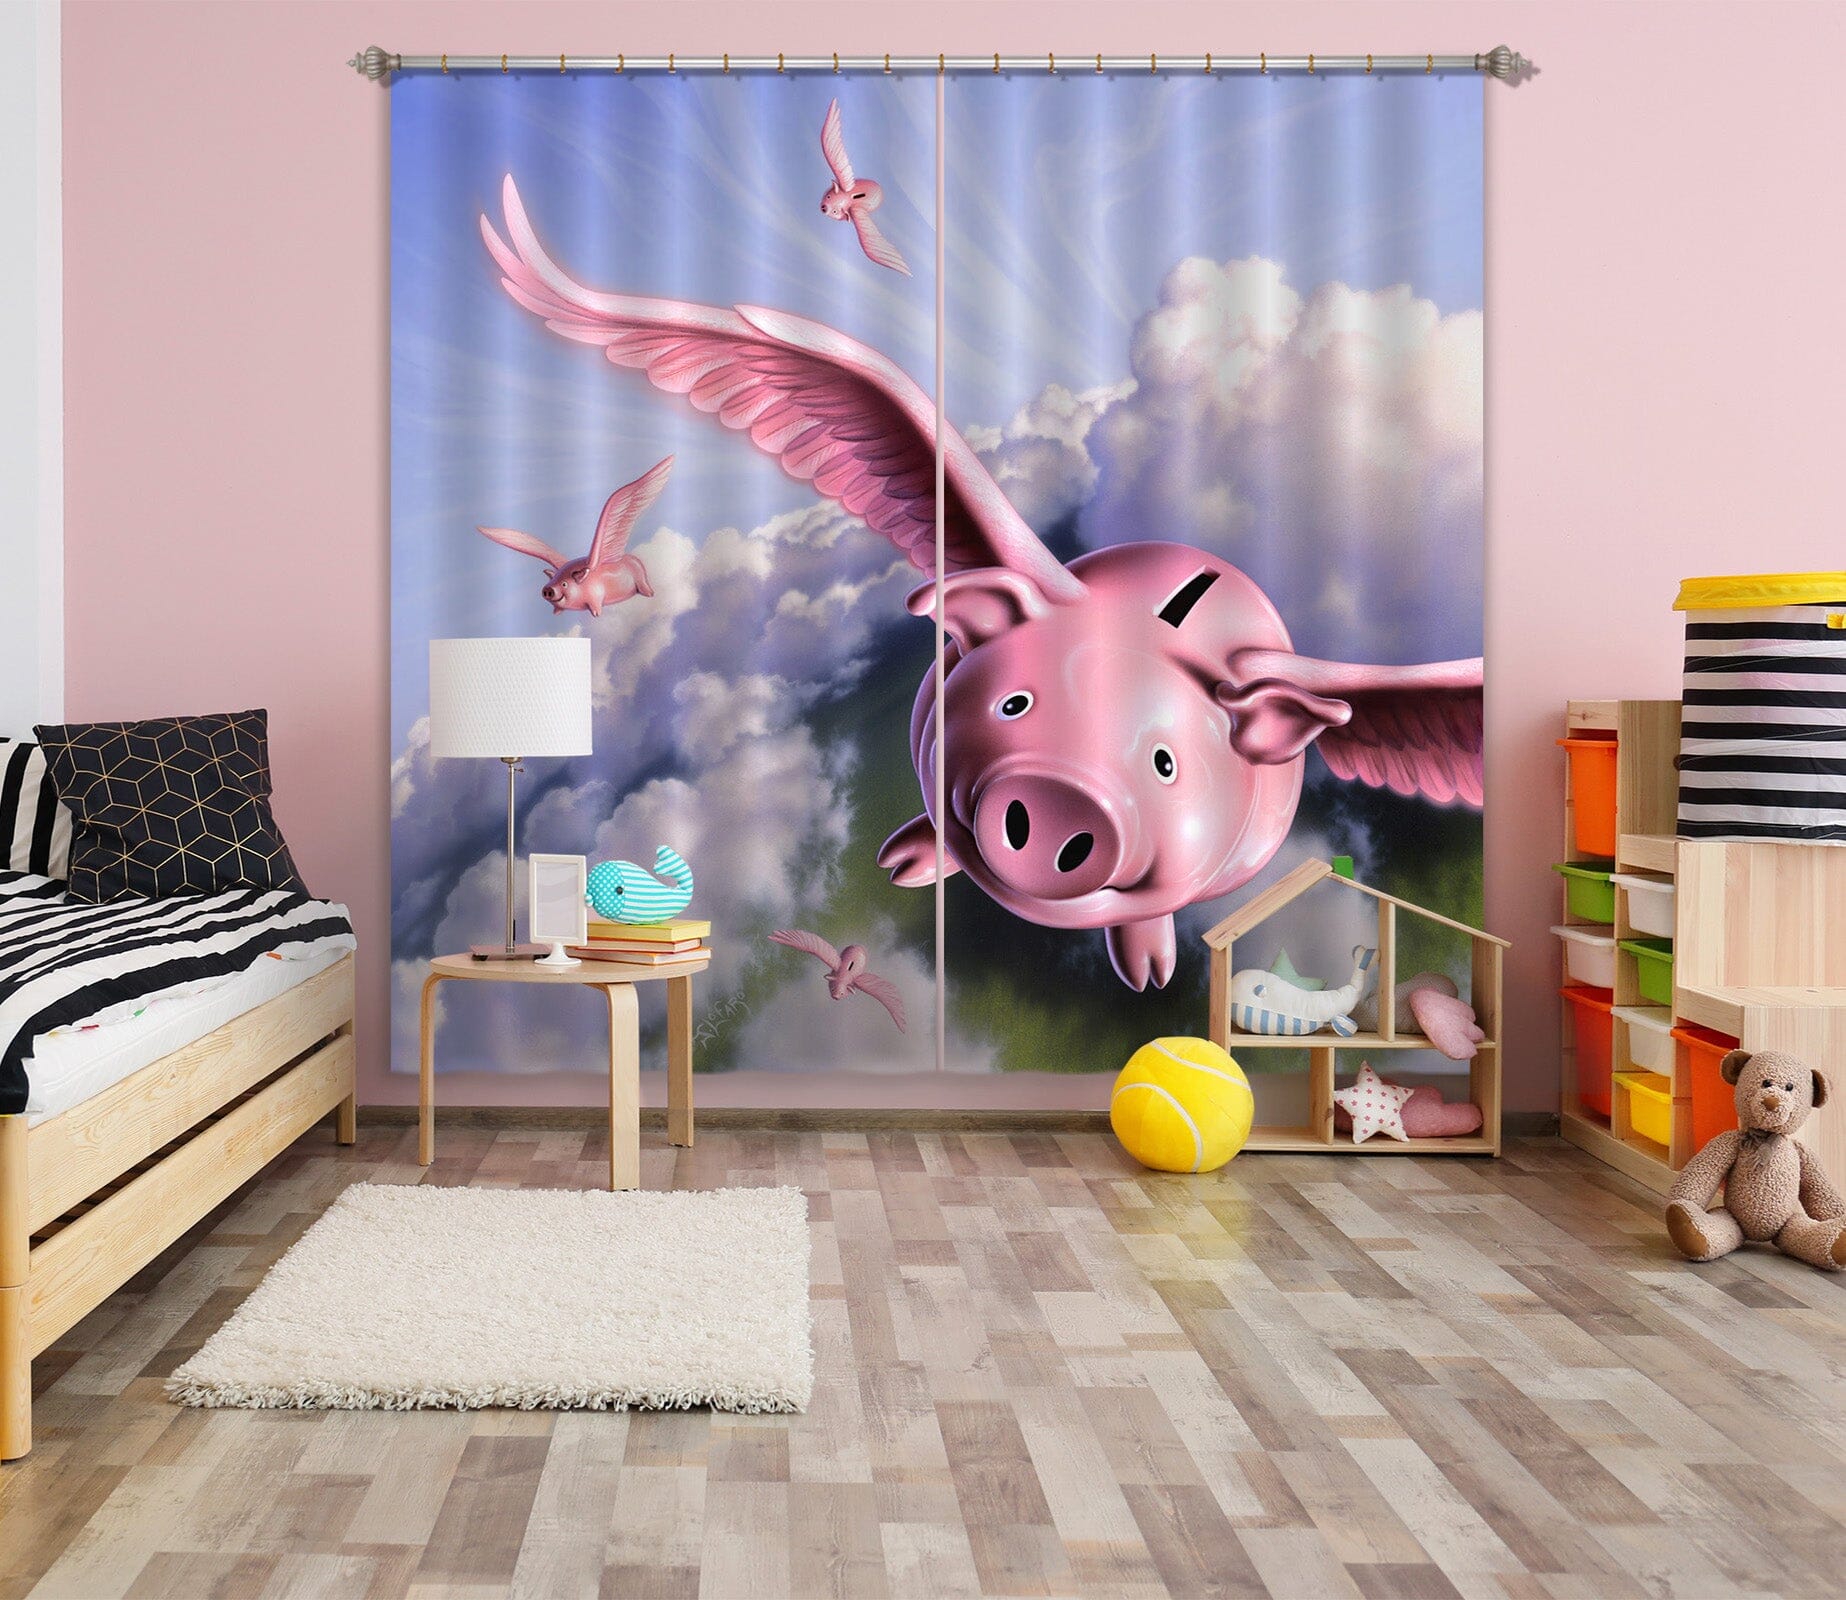 3D Flying Pig 072 Jerry LoFaro Curtain Curtains Drapes Curtains AJ Creativity Home 